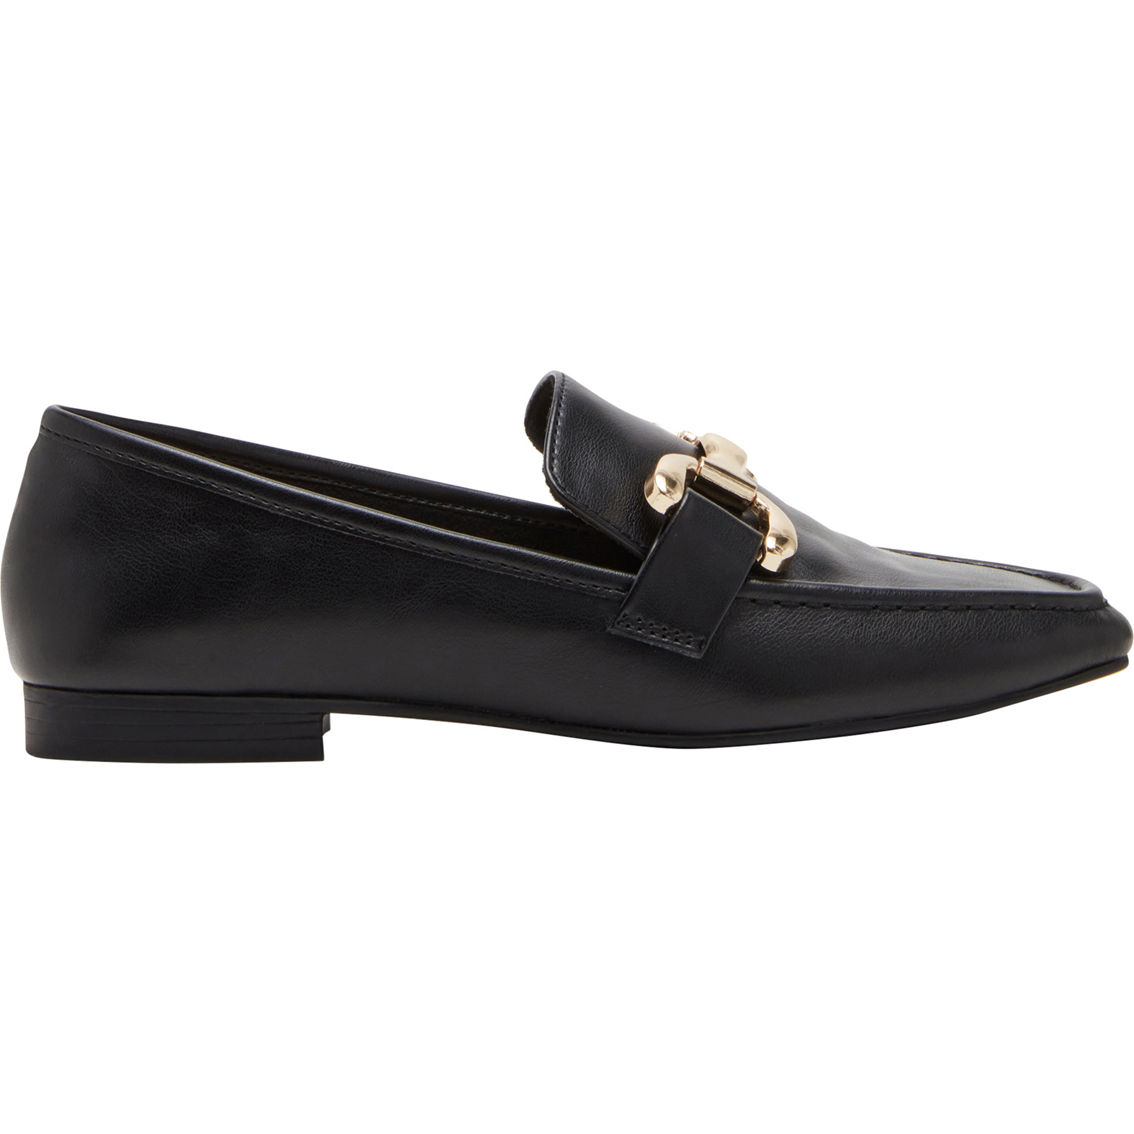 Madden Girl Derbyy Slip On Loafers | Flats | Shoes | Shop The Exchange